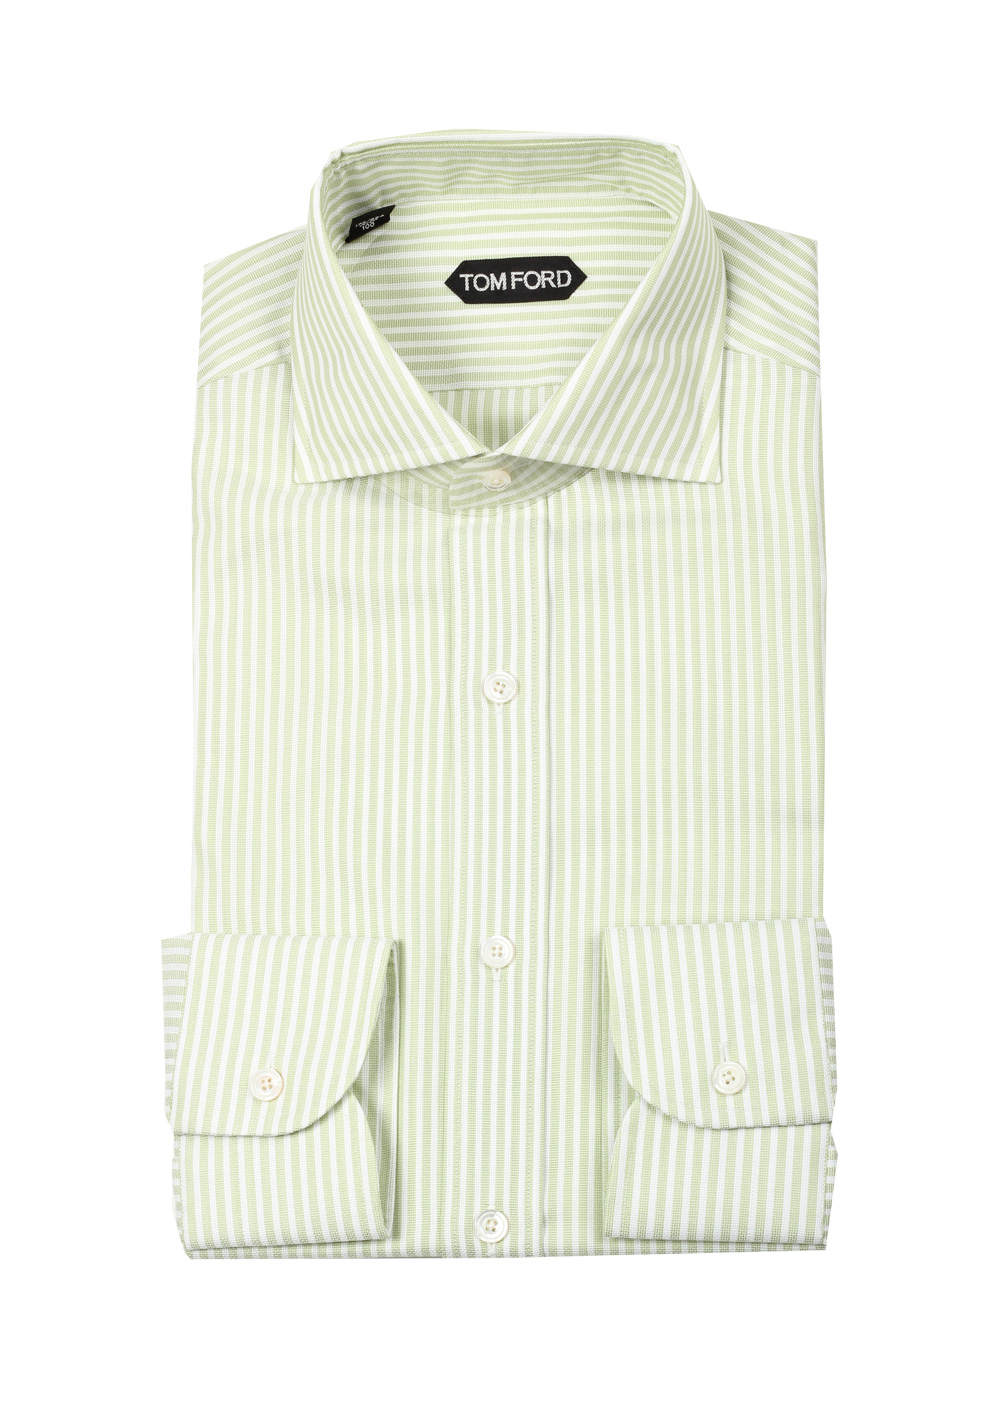 TOM FORD Striped White Green Dress Shirt Size 40 / 15,75 U.S. | Costume Limité